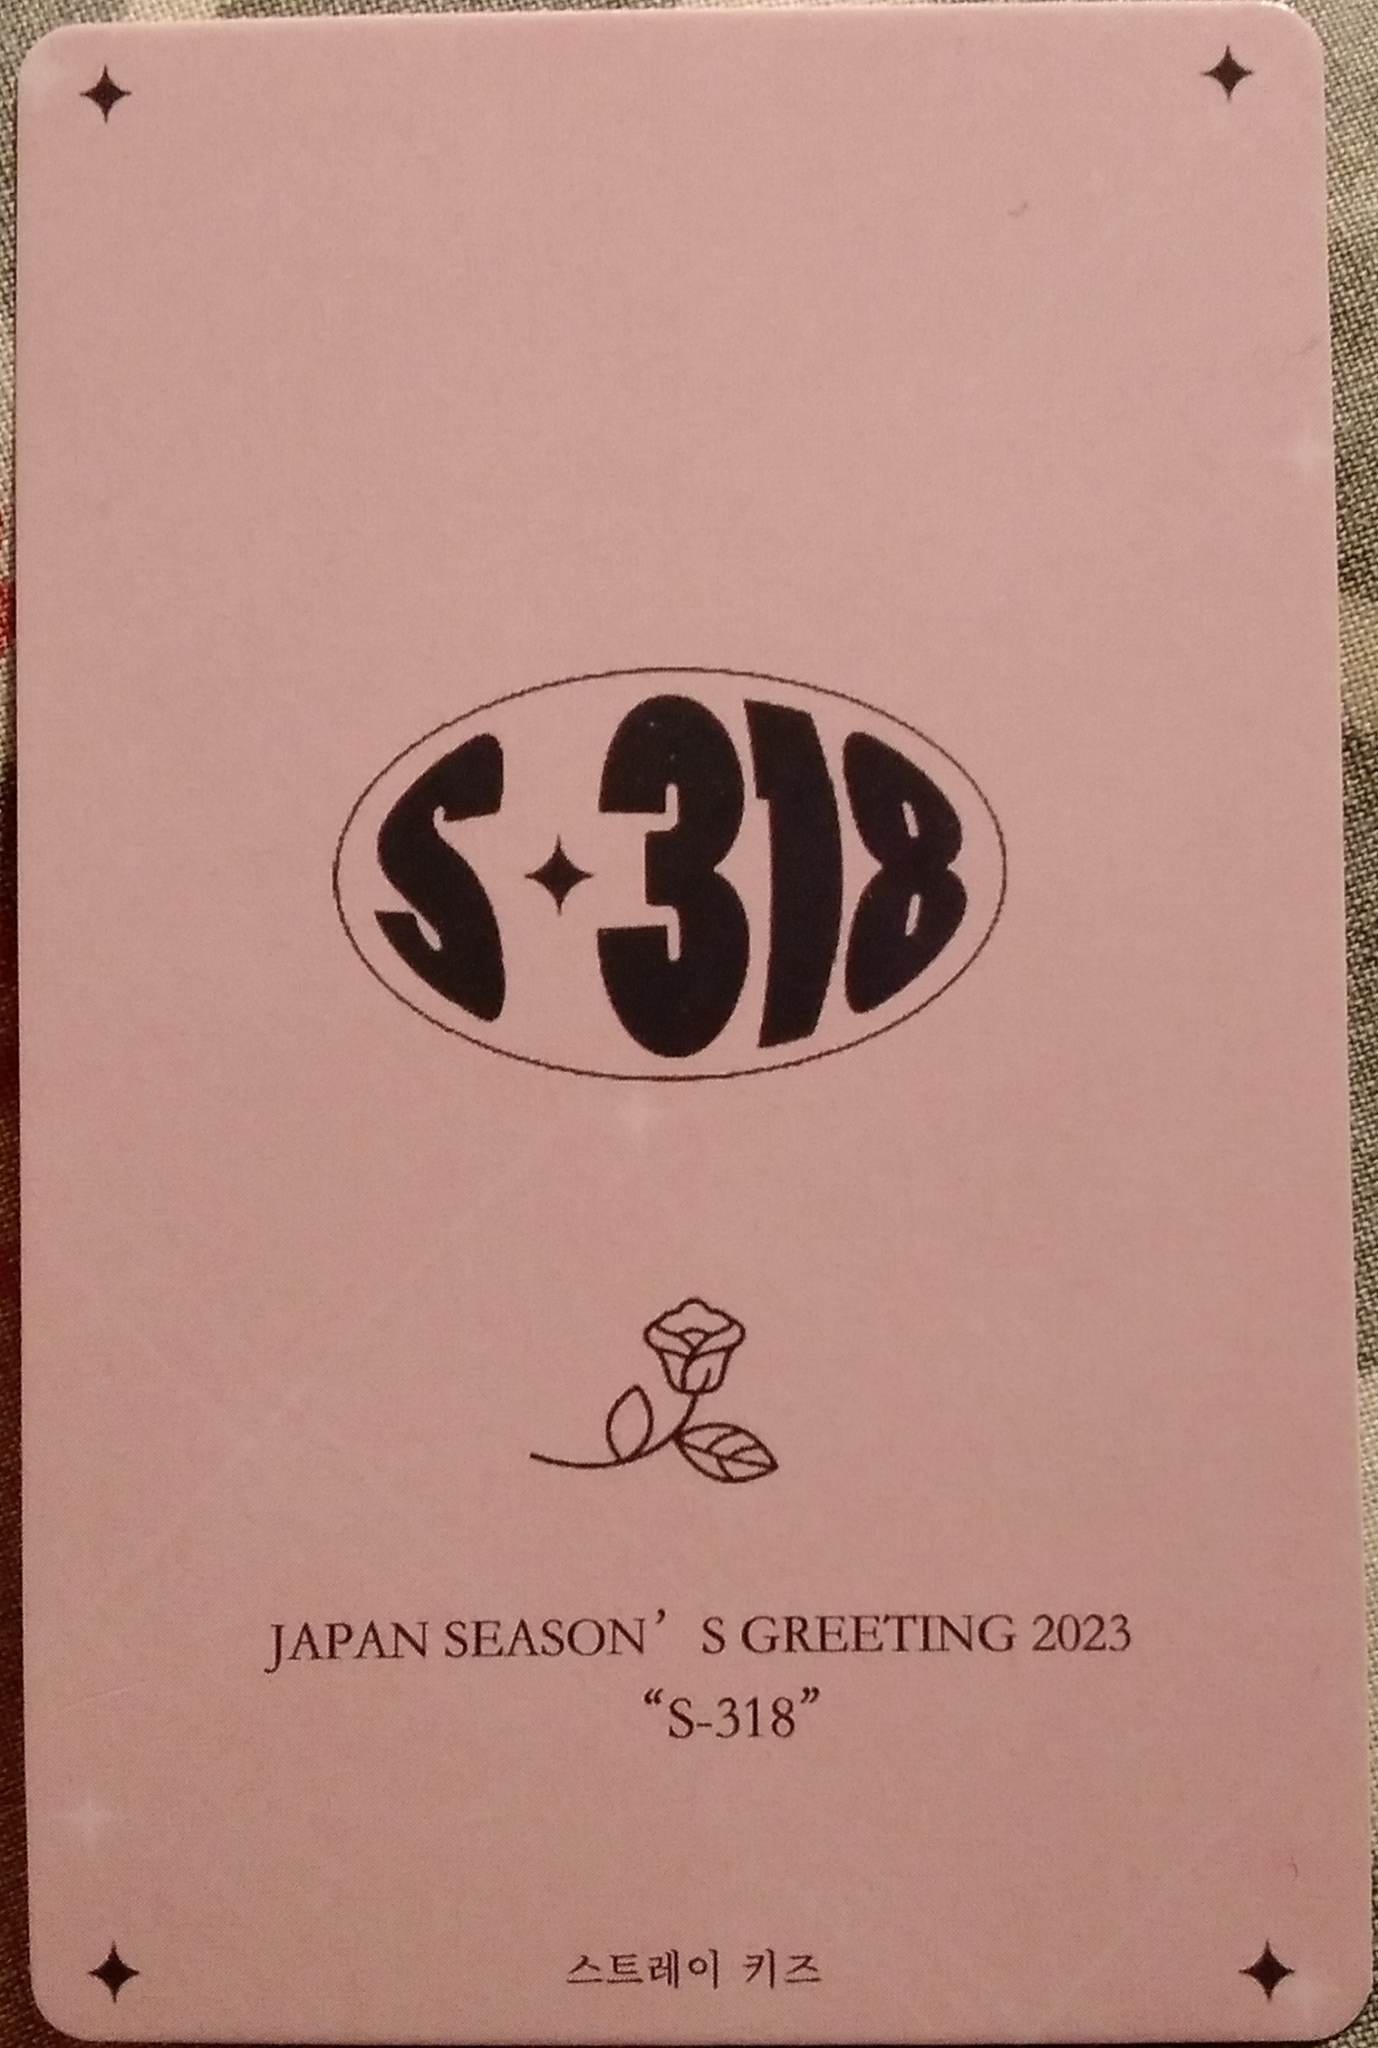 Photocard  STRAYKIDS  Japan season s greetings 2023  "S-318"